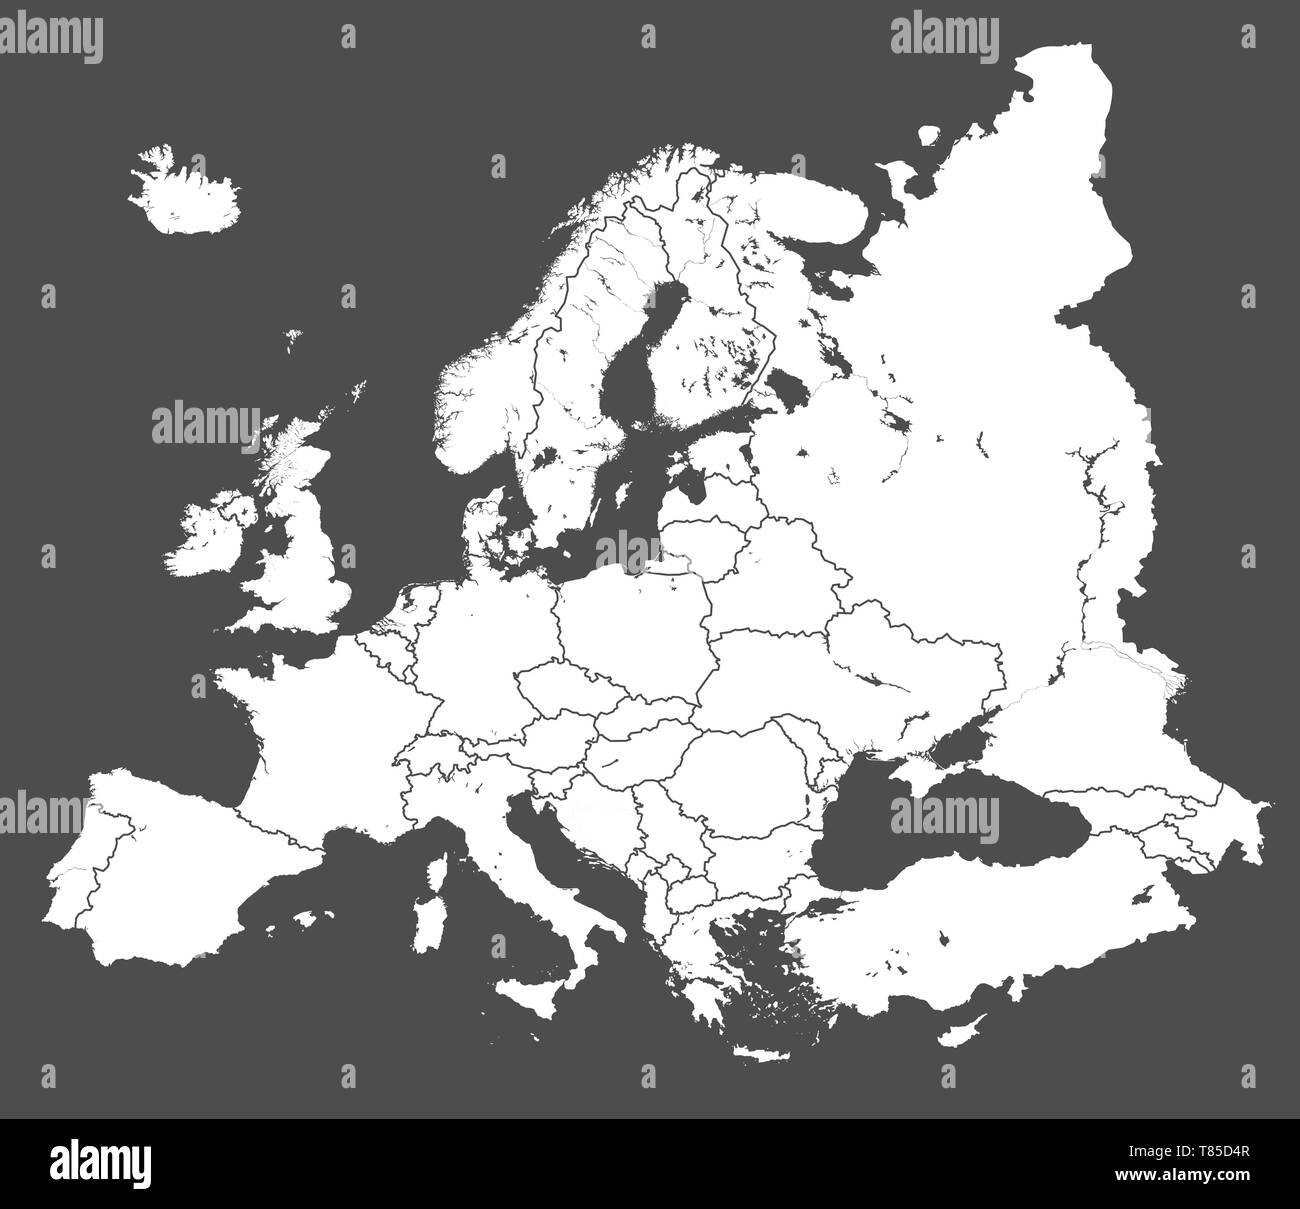 Europe vector high detailed political map Stock Vector